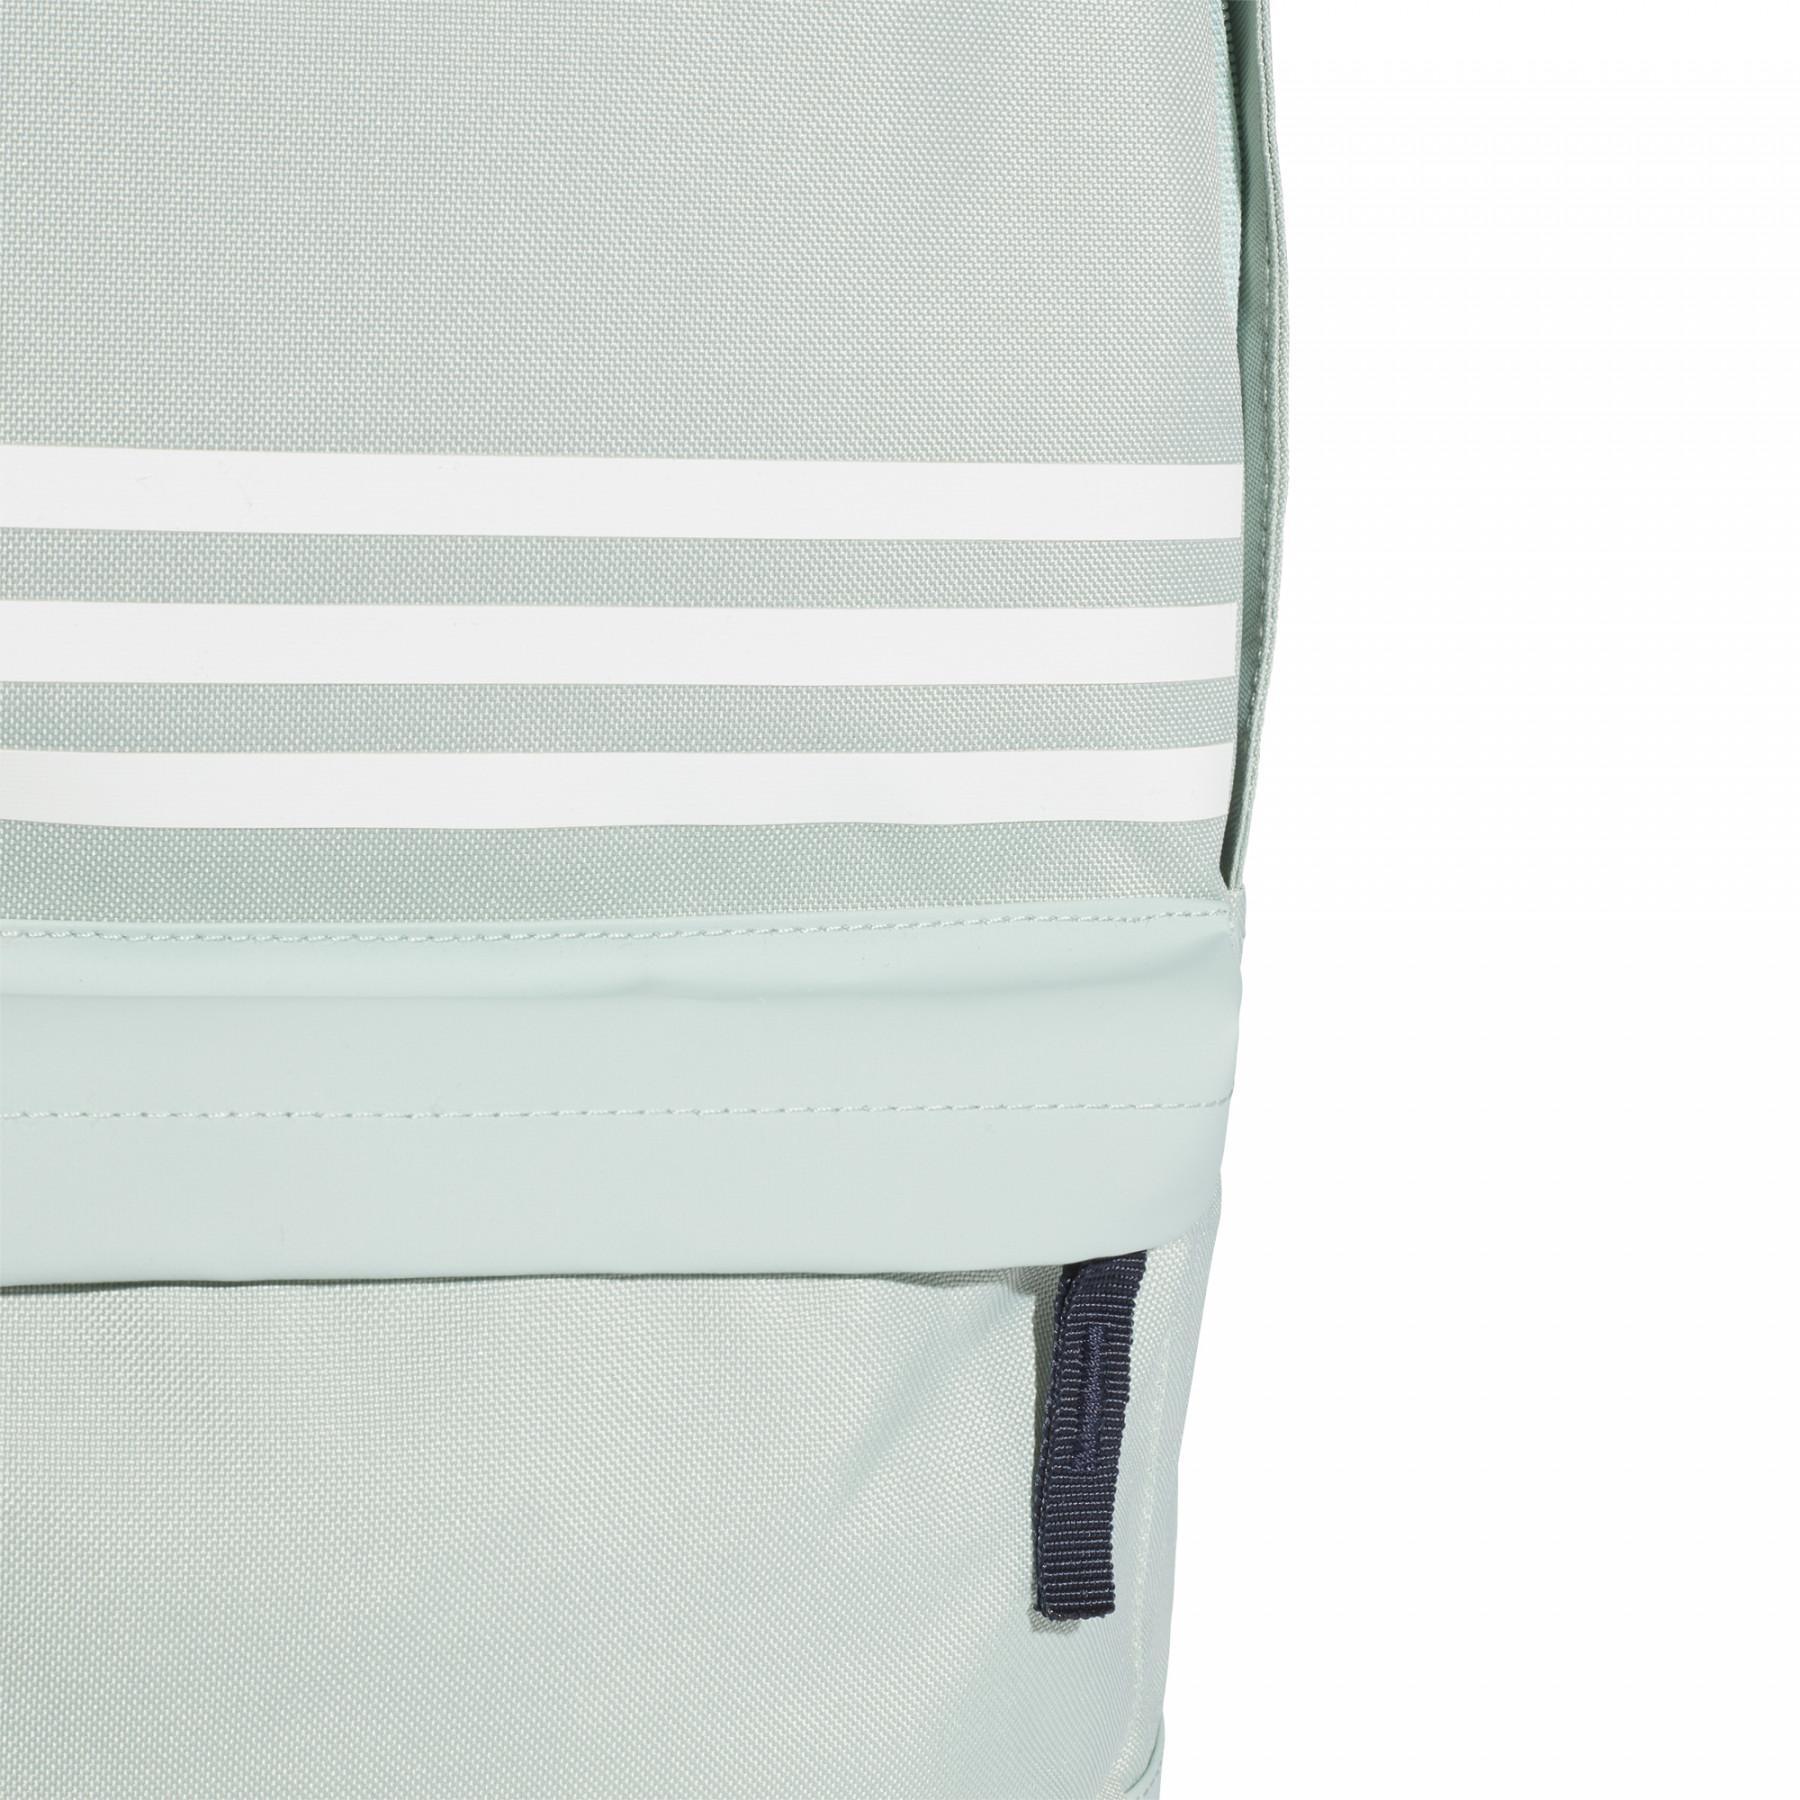 Rugzak adidas 3-Stripes Pocket